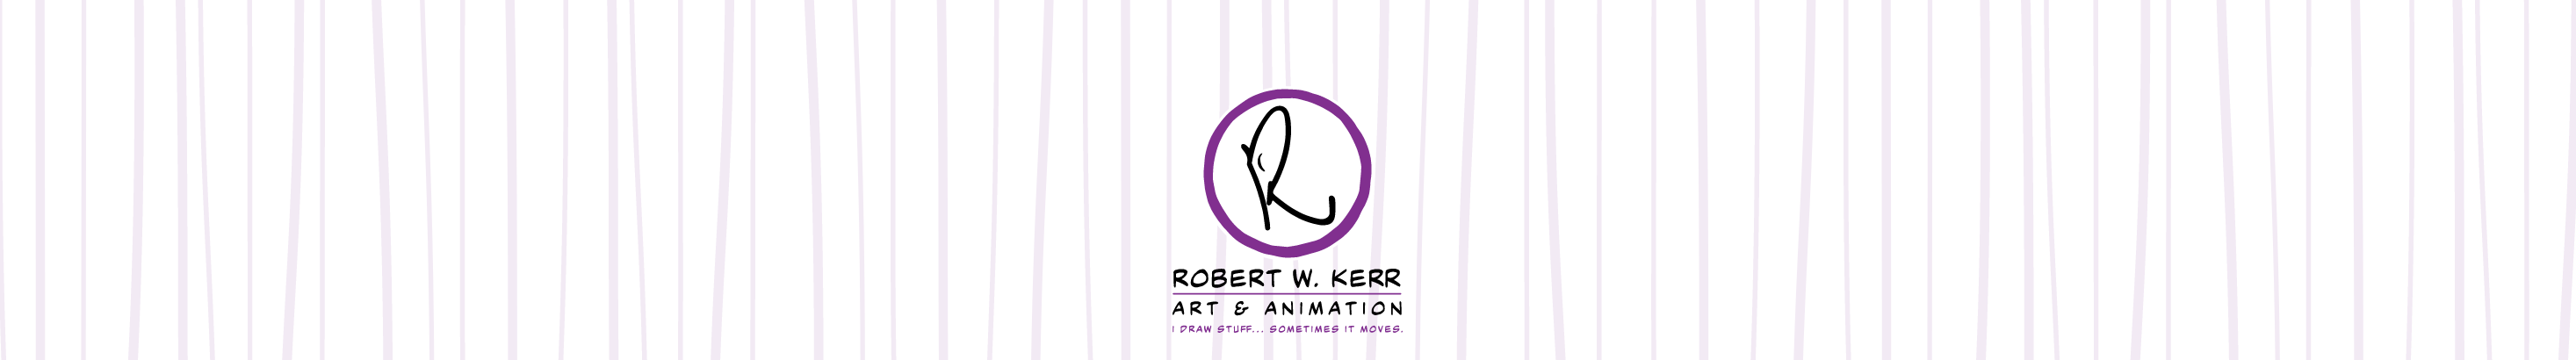 Robert W. Kerr's profile banner